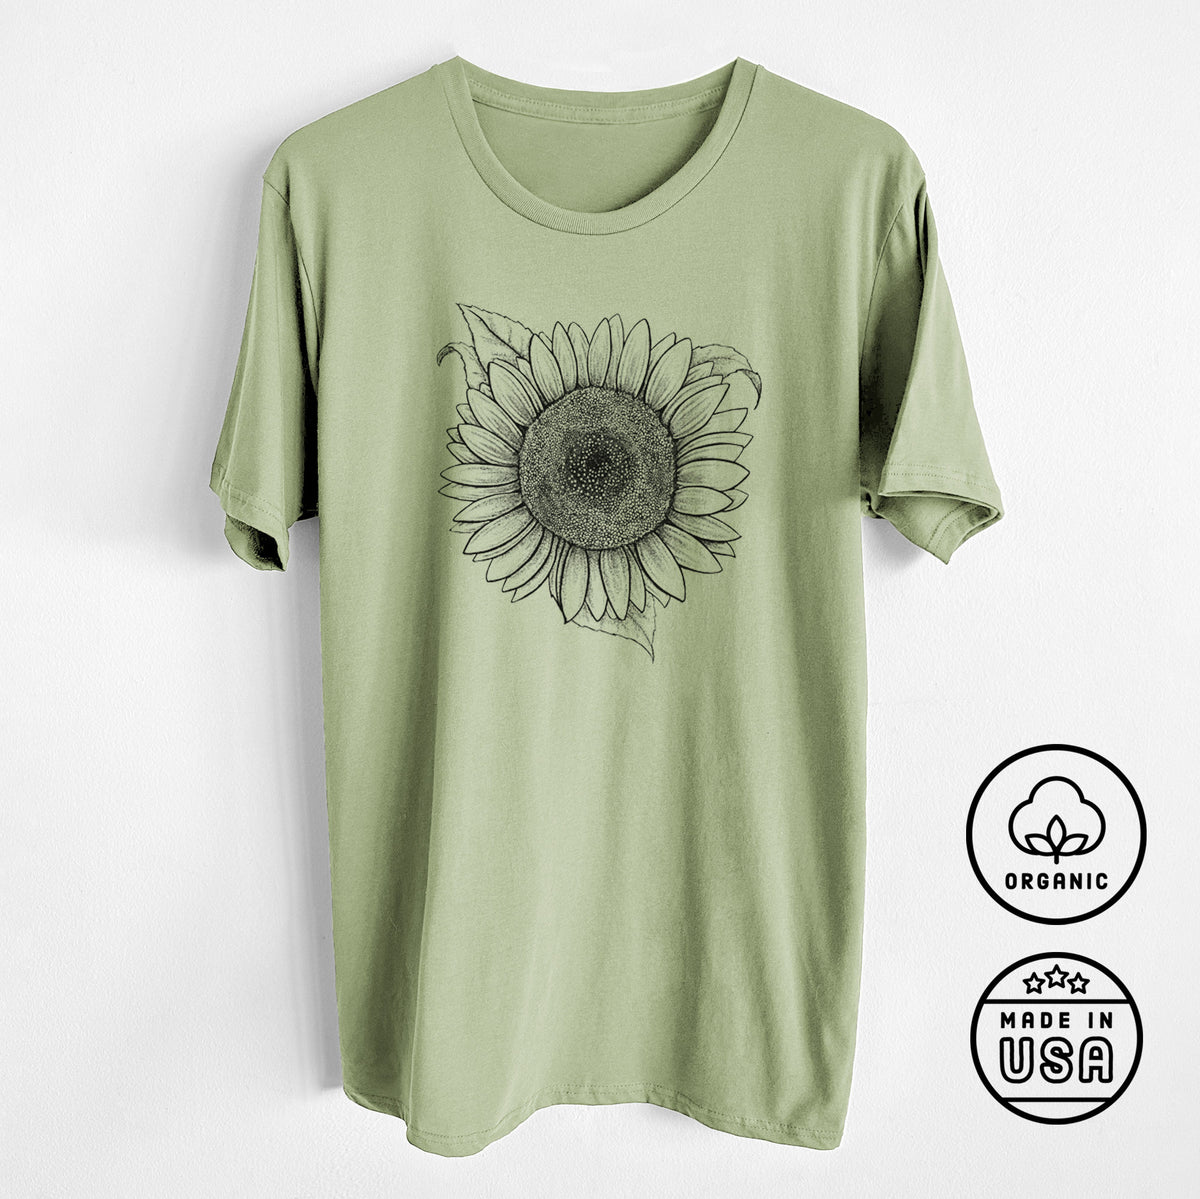 Lemon Queen Sunflower - Helianthus Annuus - Unisex Crewneck - Made in USA - 100% Organic Cotton